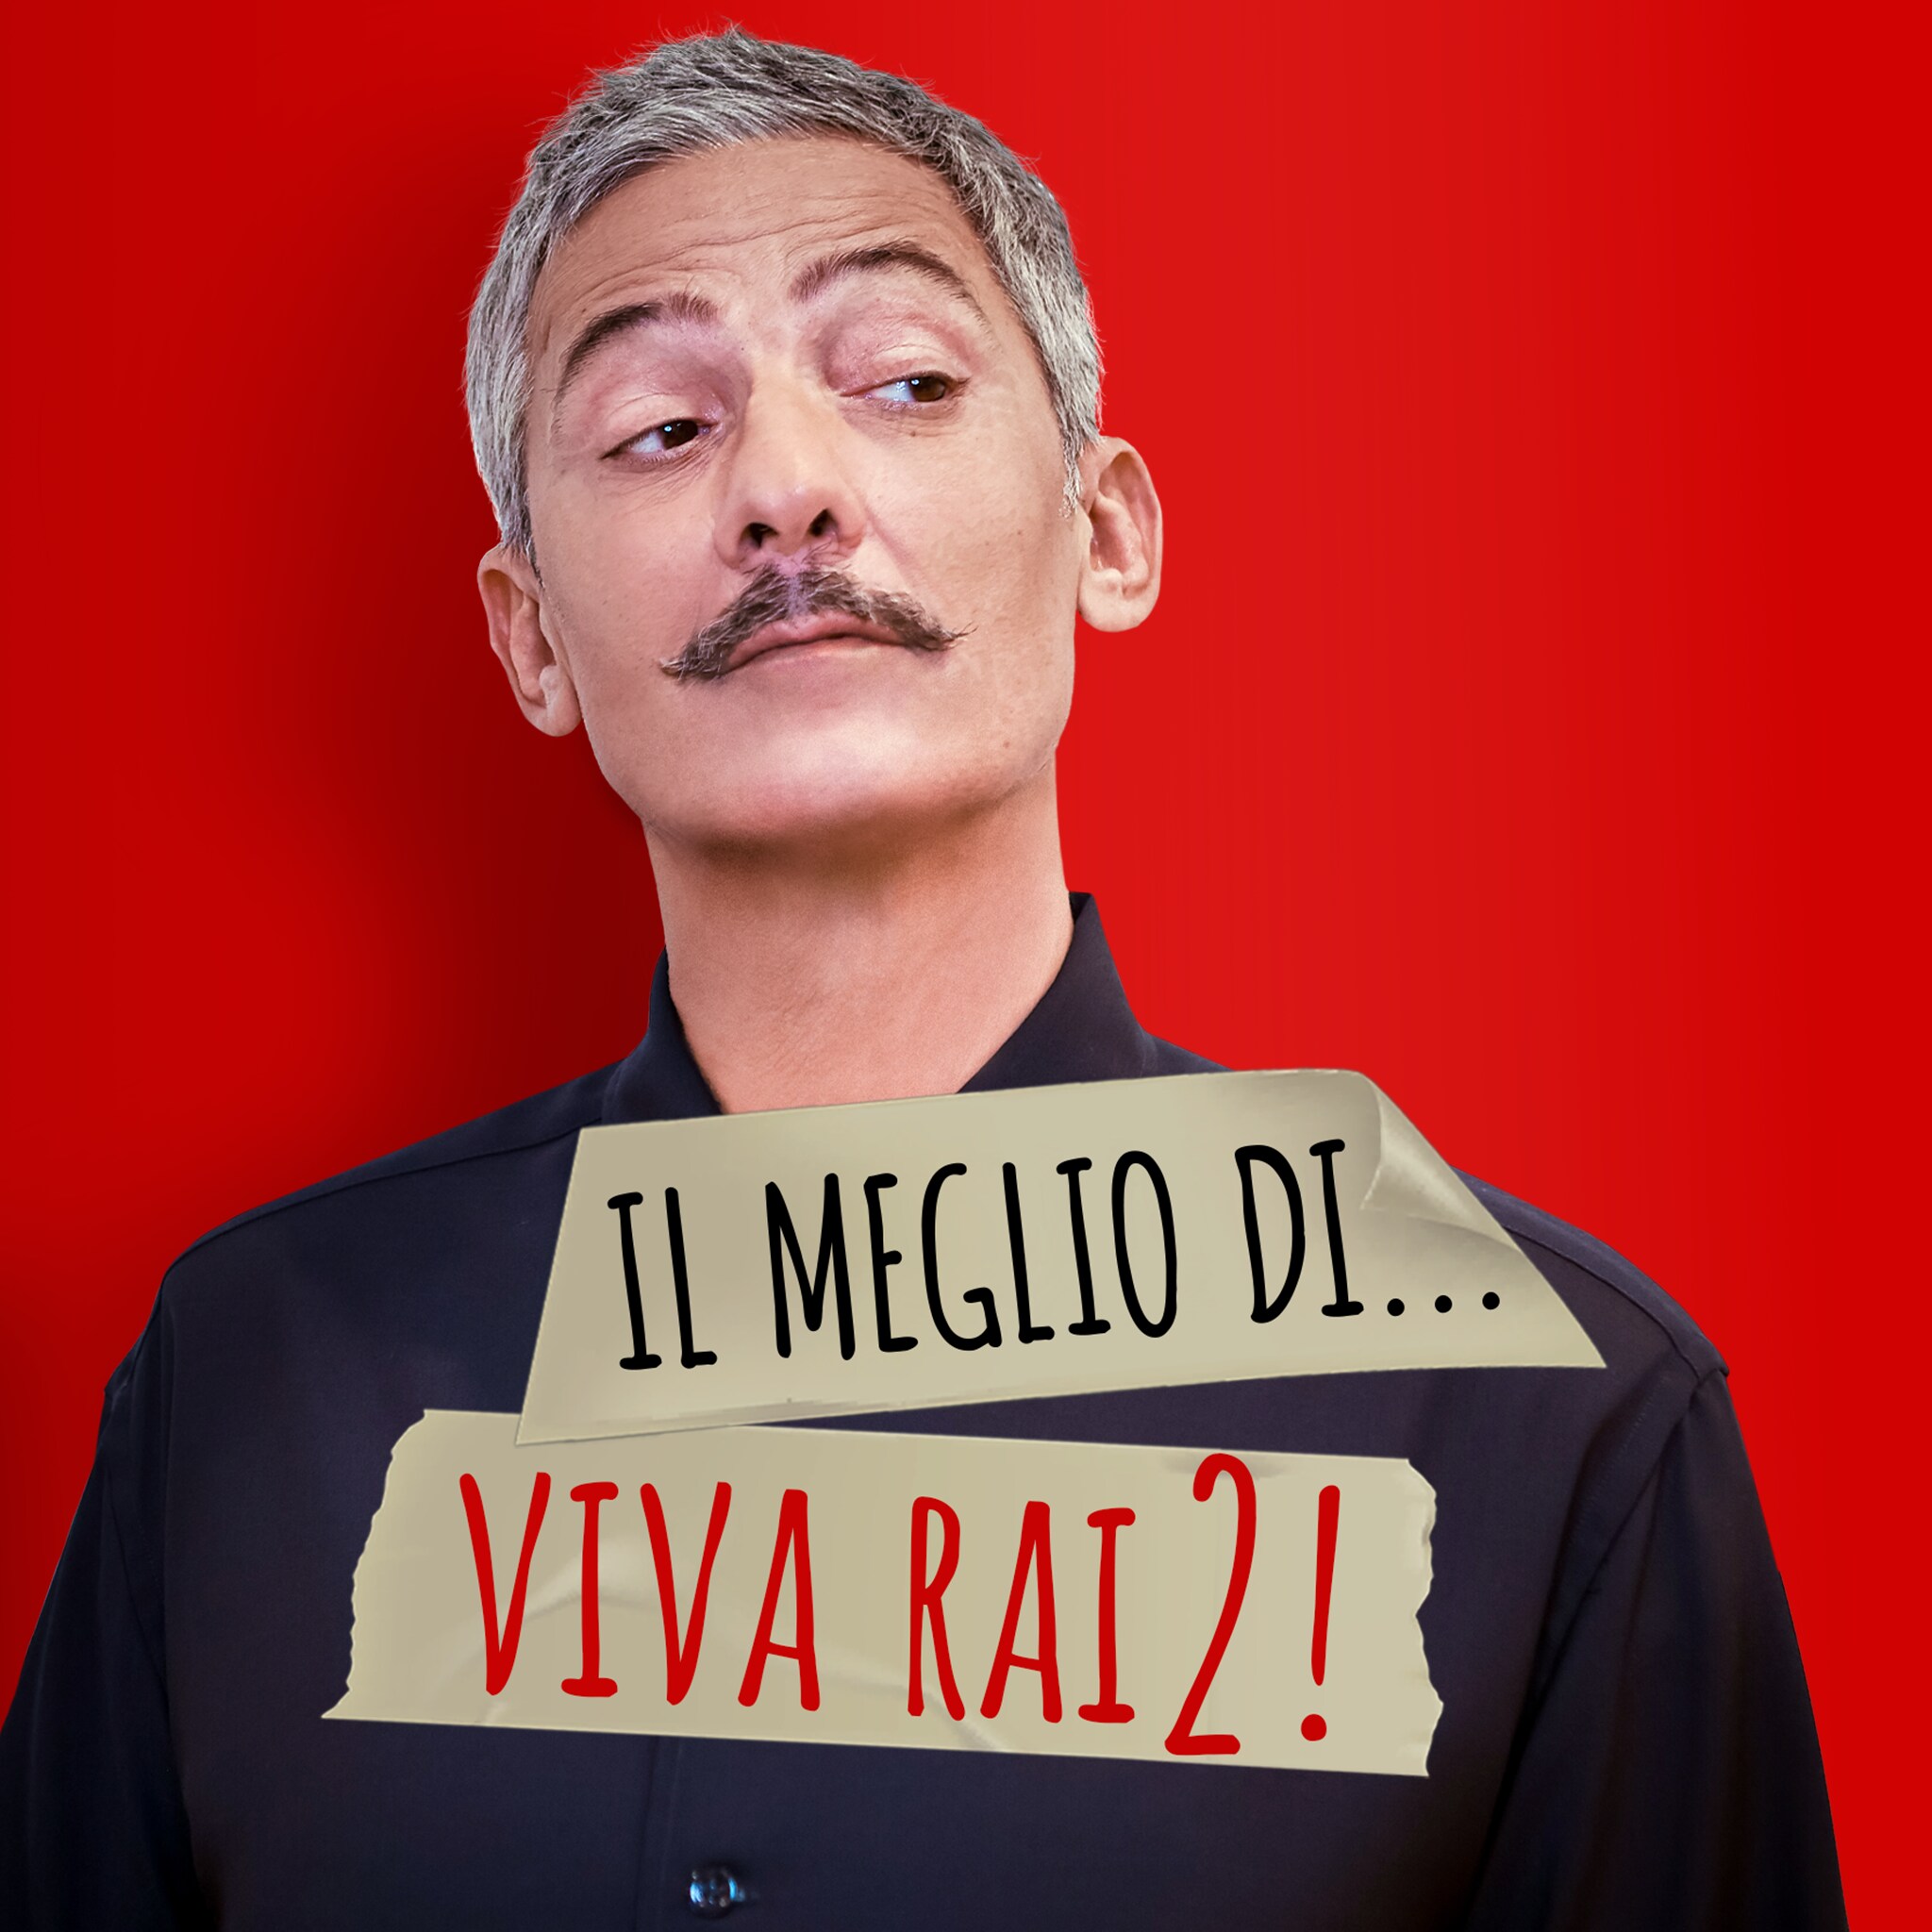 Rai Radio 2 Viva Rai2! Il Meglio Di